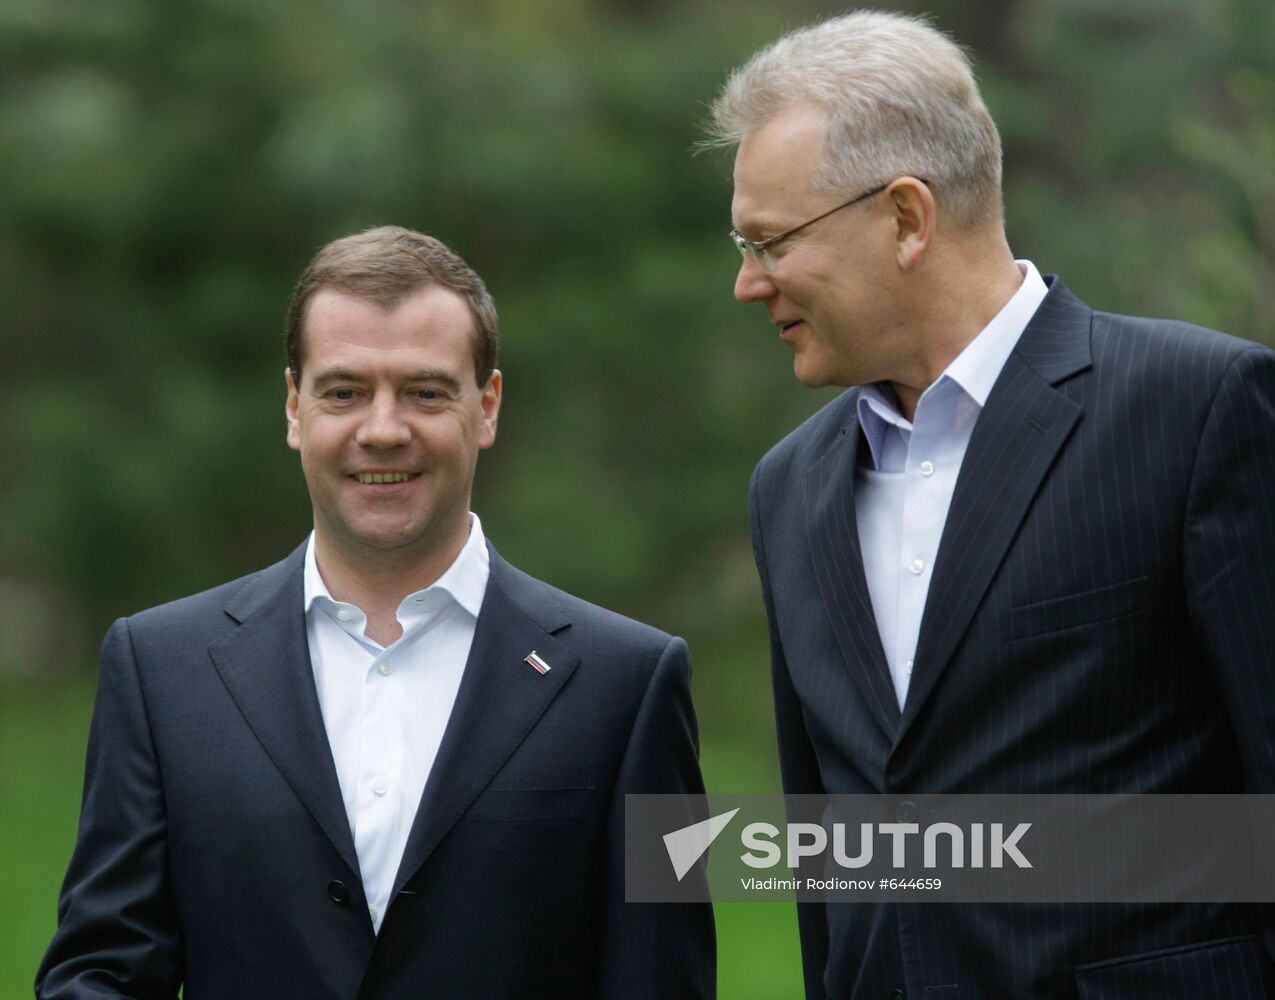 President Dmitry Medvedev gives interview to Izvestia